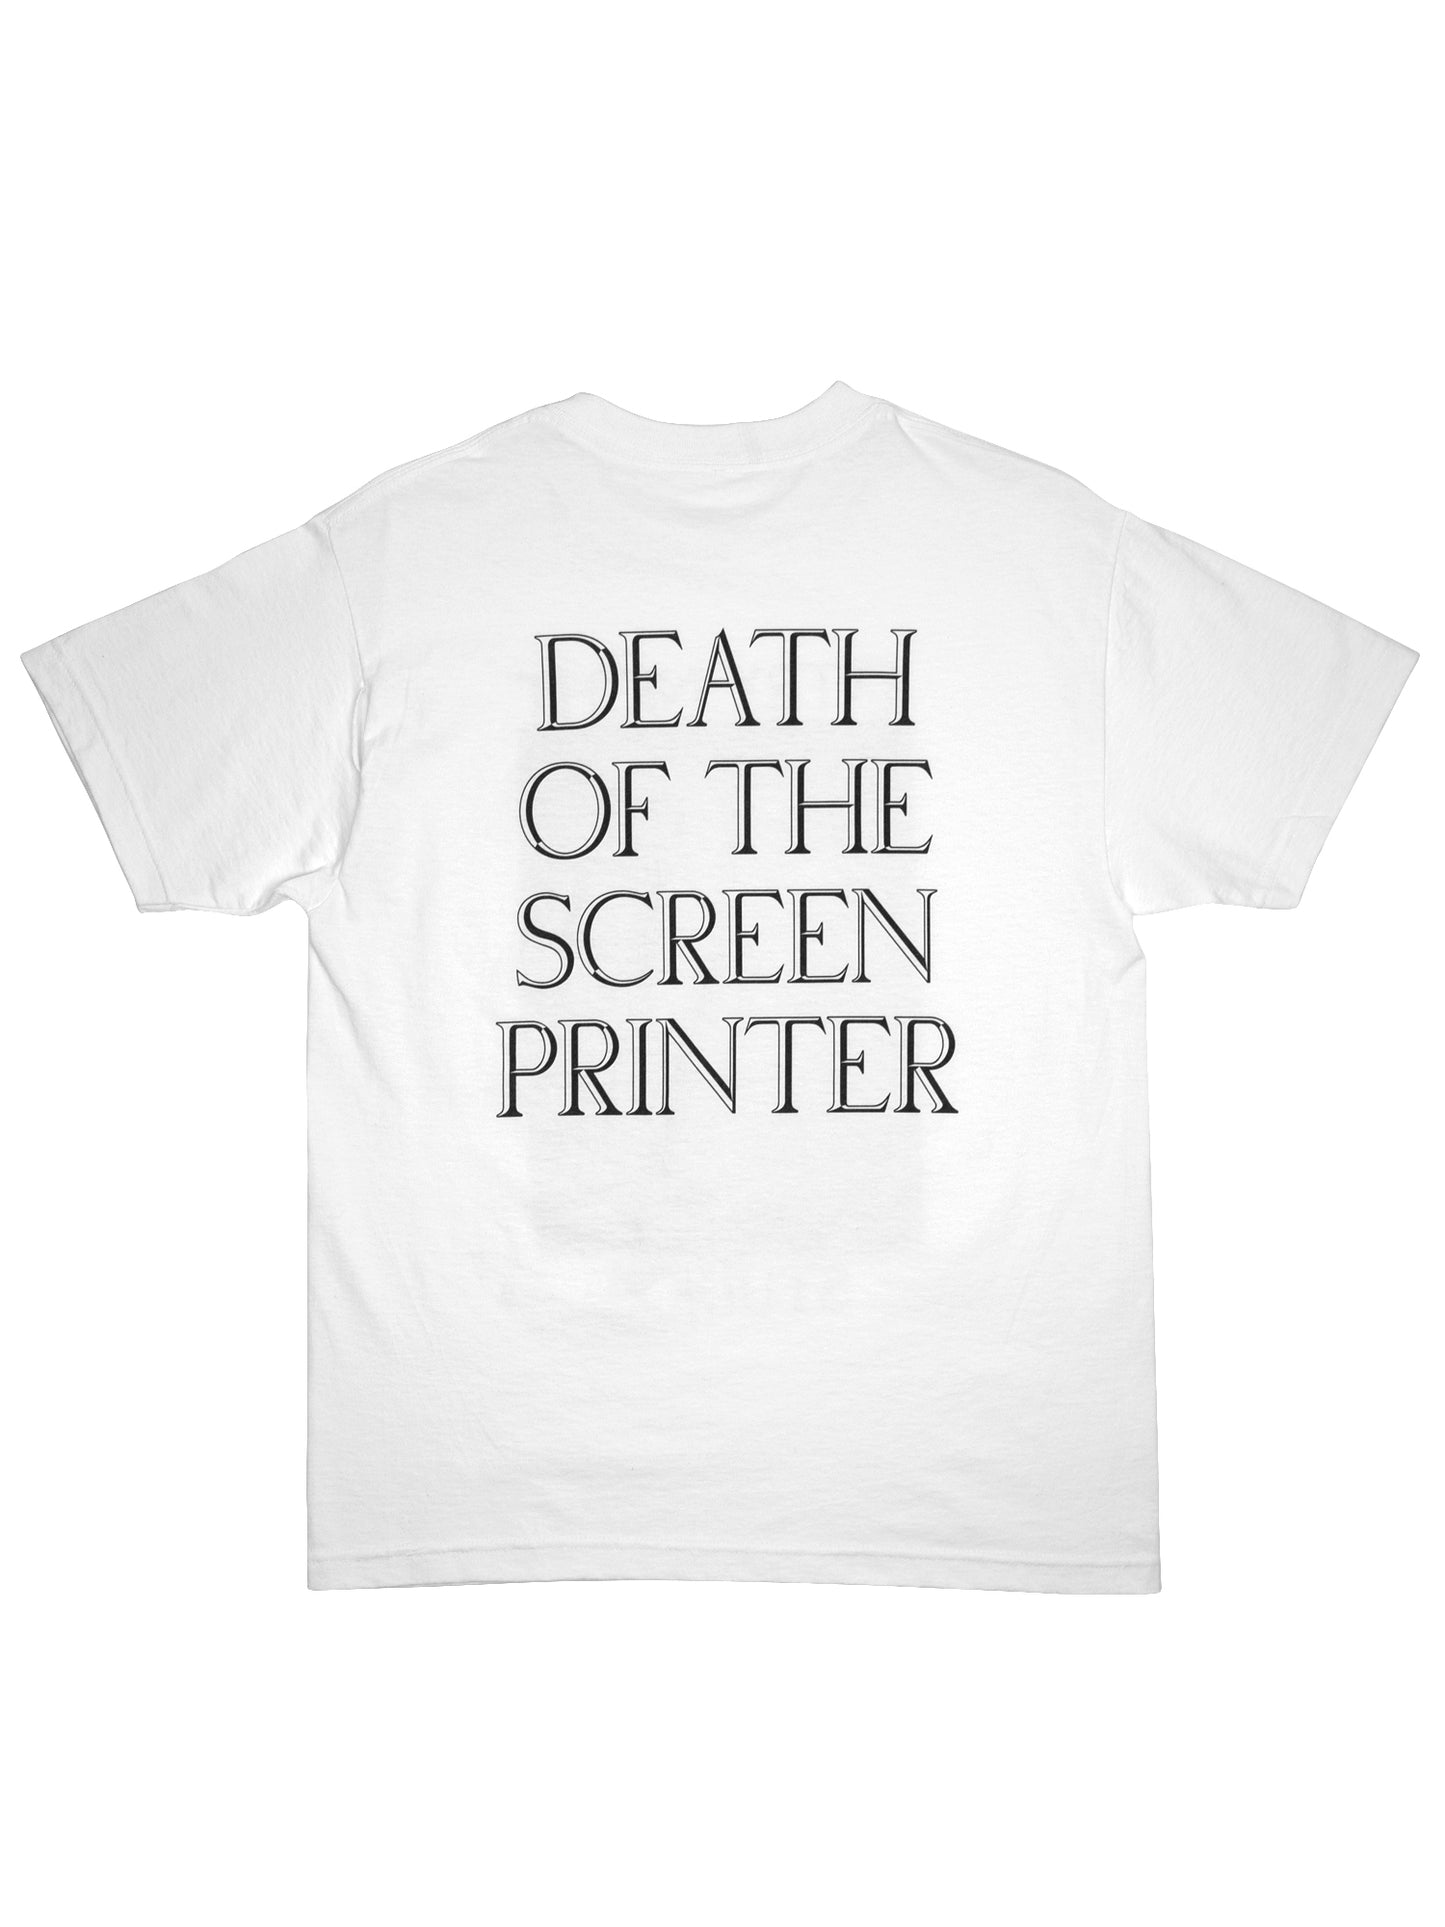 Death of the Screen Printer Tee